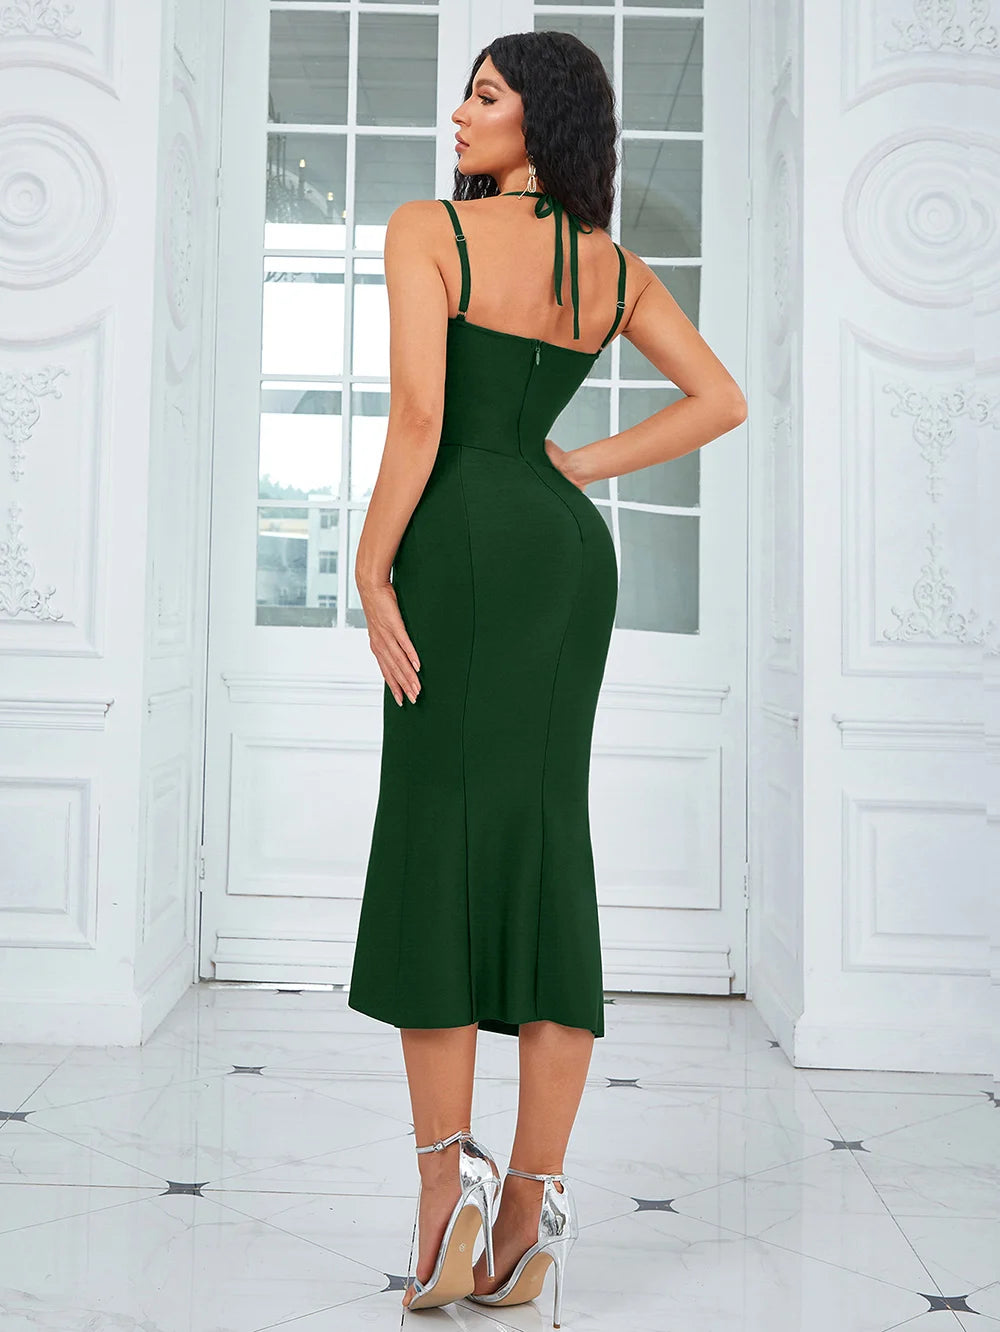 Bodycon Green Slim Spaghetti Strap Prom Party Dress For Women Elegant Sleeveless Bandage Evening Club Dress Vestidos